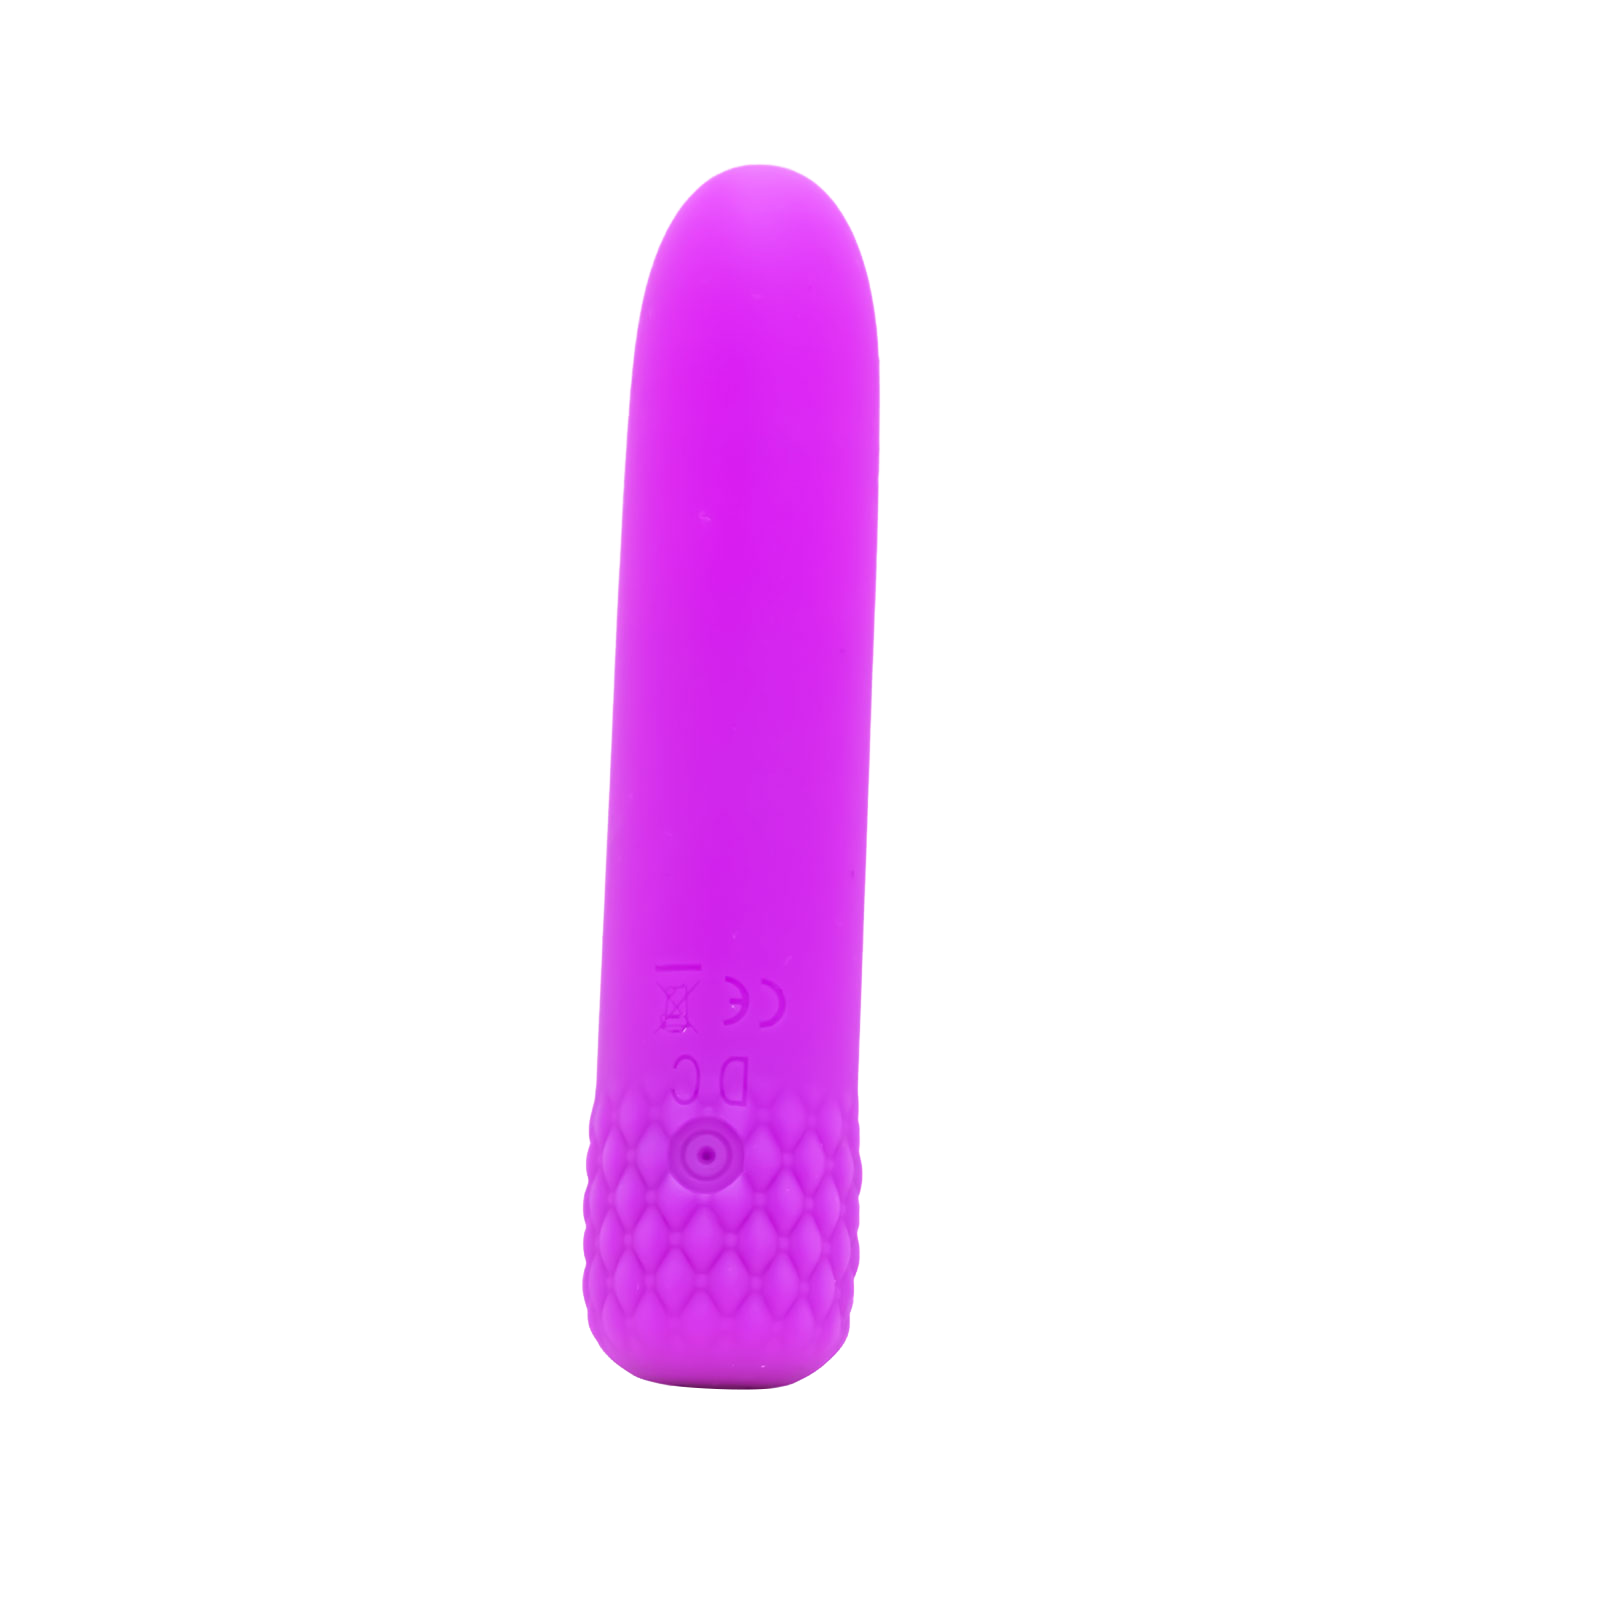 „MINI FLEXI“ Flexibler Klitoris-Vibrator